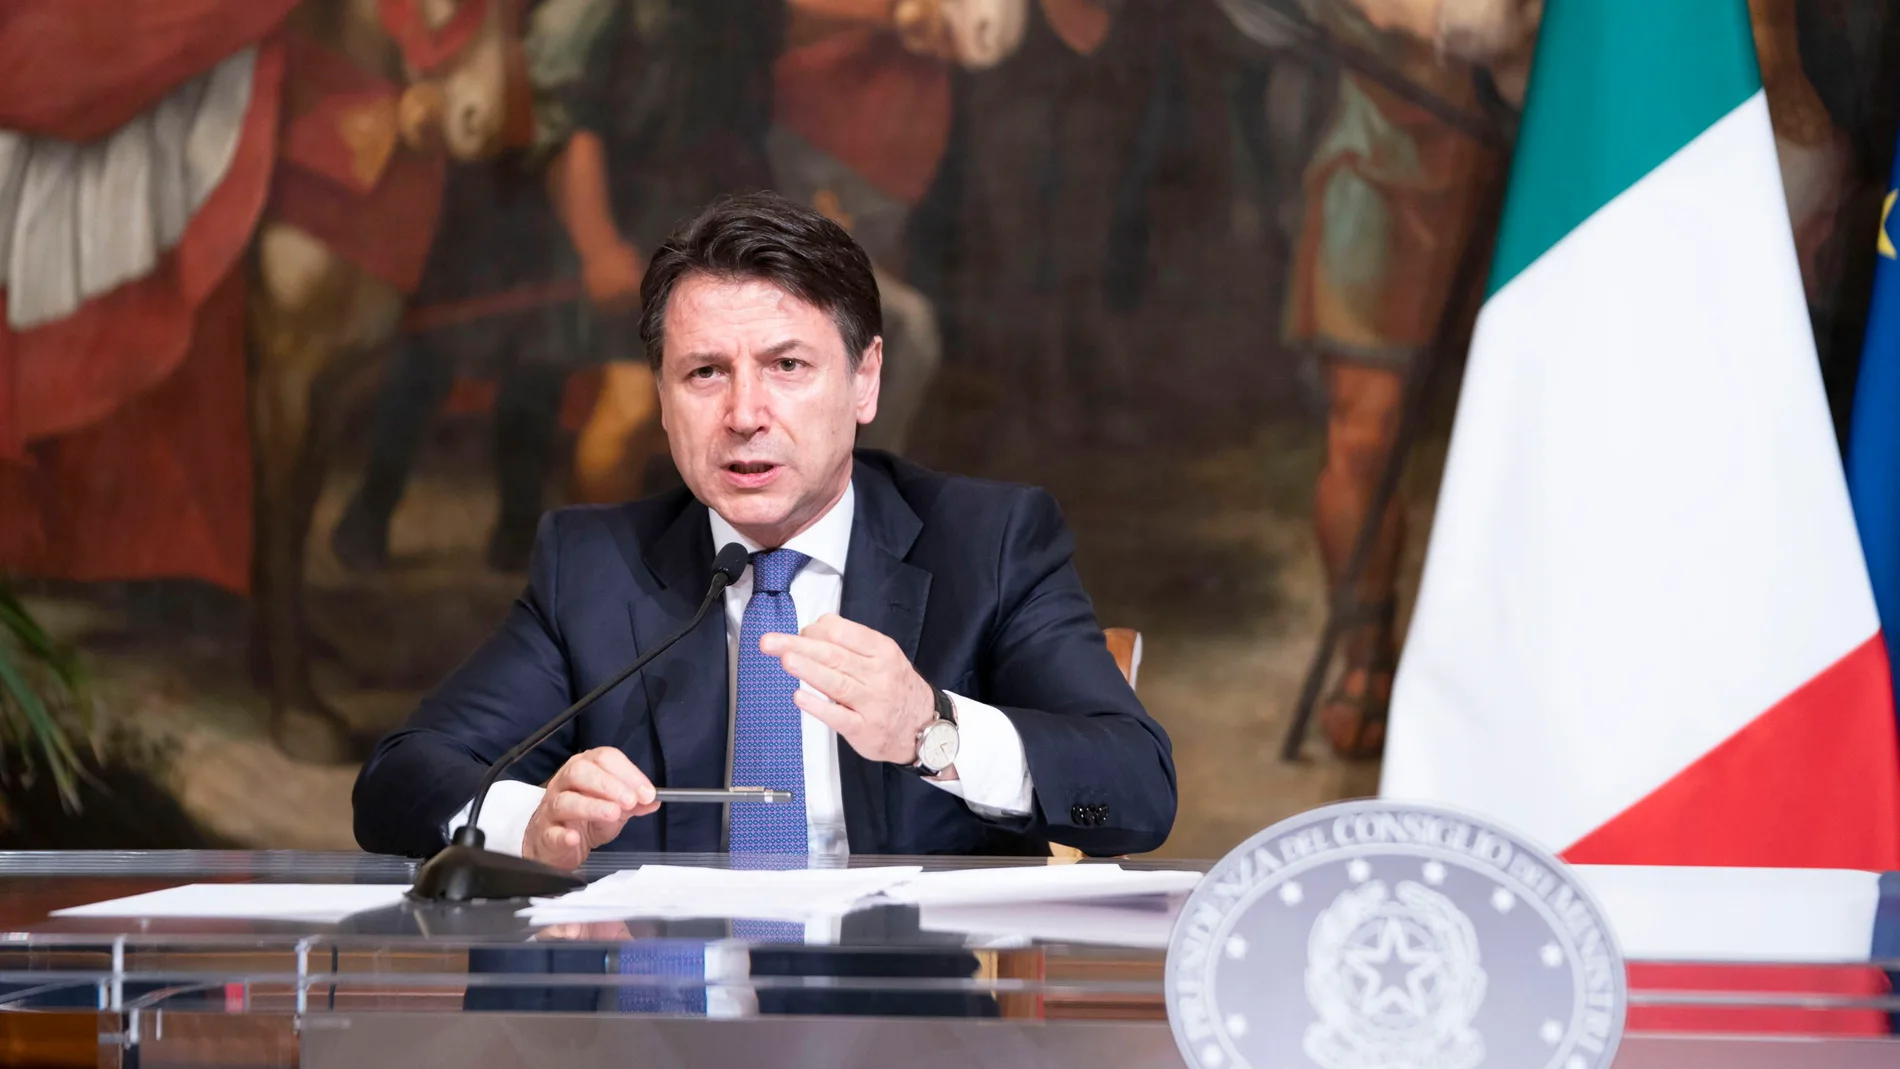 Coronavirus in Italy, Prime Minister Giuseppe Conte press conference